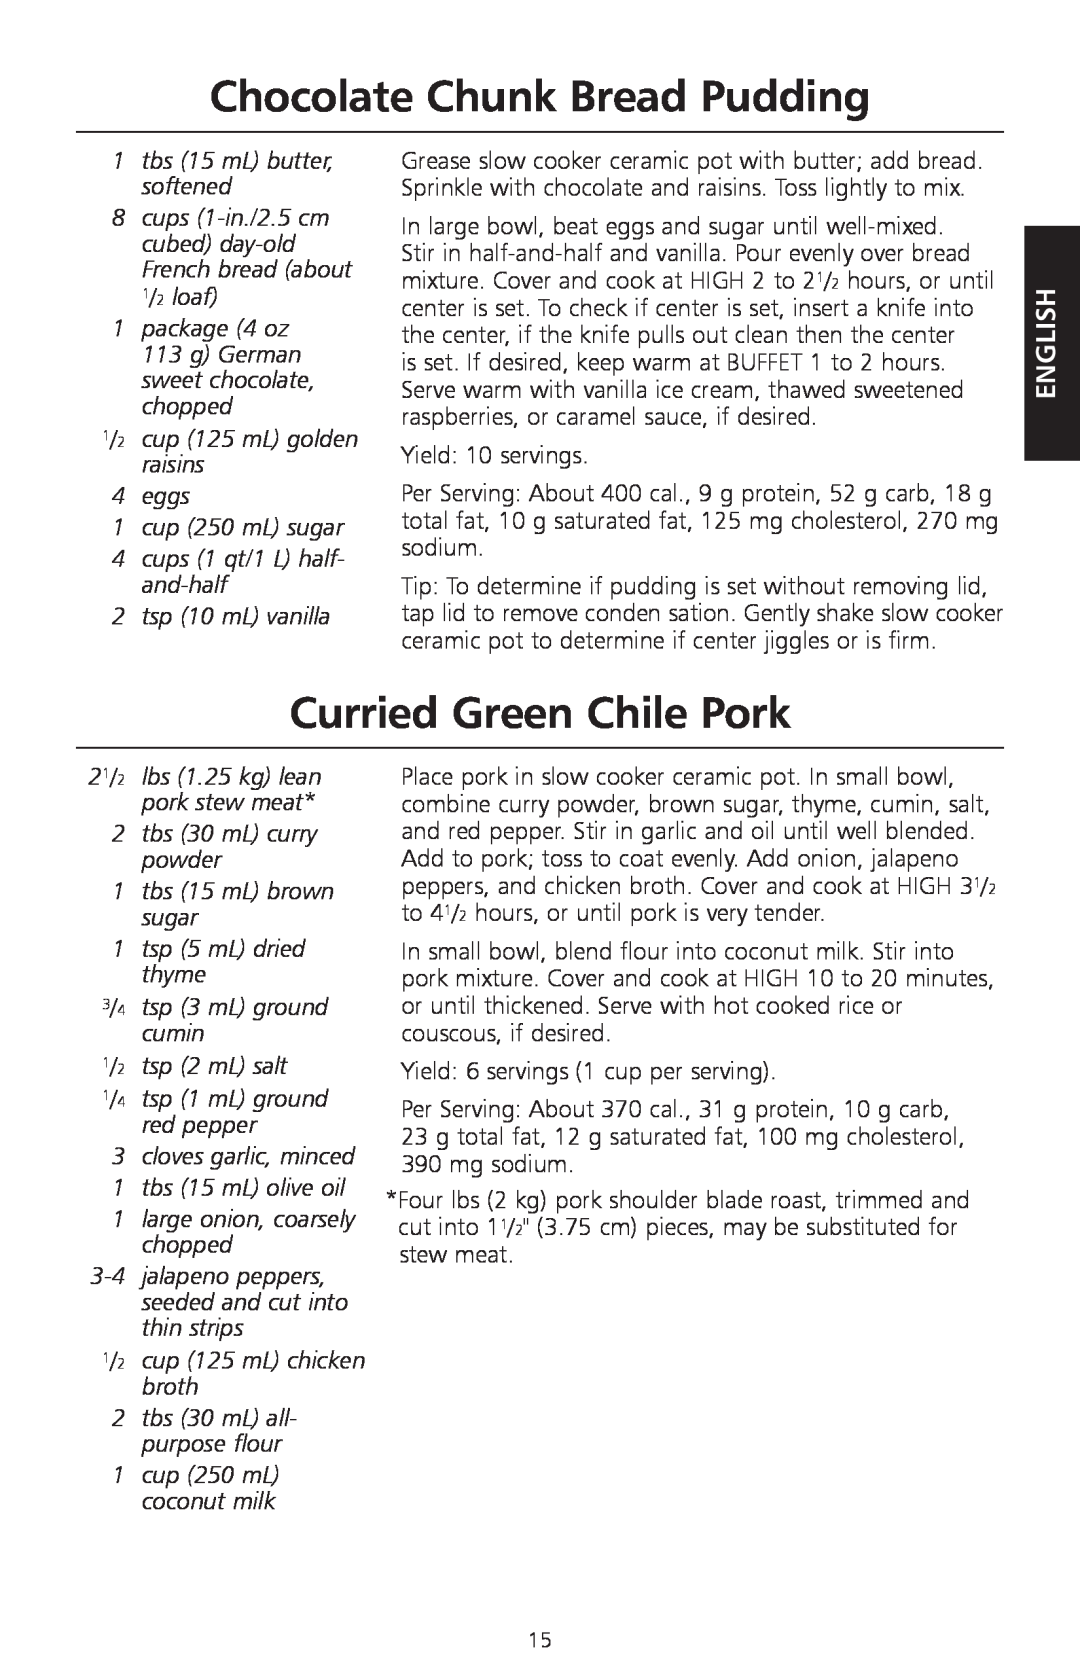 KitchenAid KSC700 Chocolate Chunk Bread Pudding, Curried Green Chile Pork, 1tbs 15 mL butter, softened, tsp 10 mL vanilla 